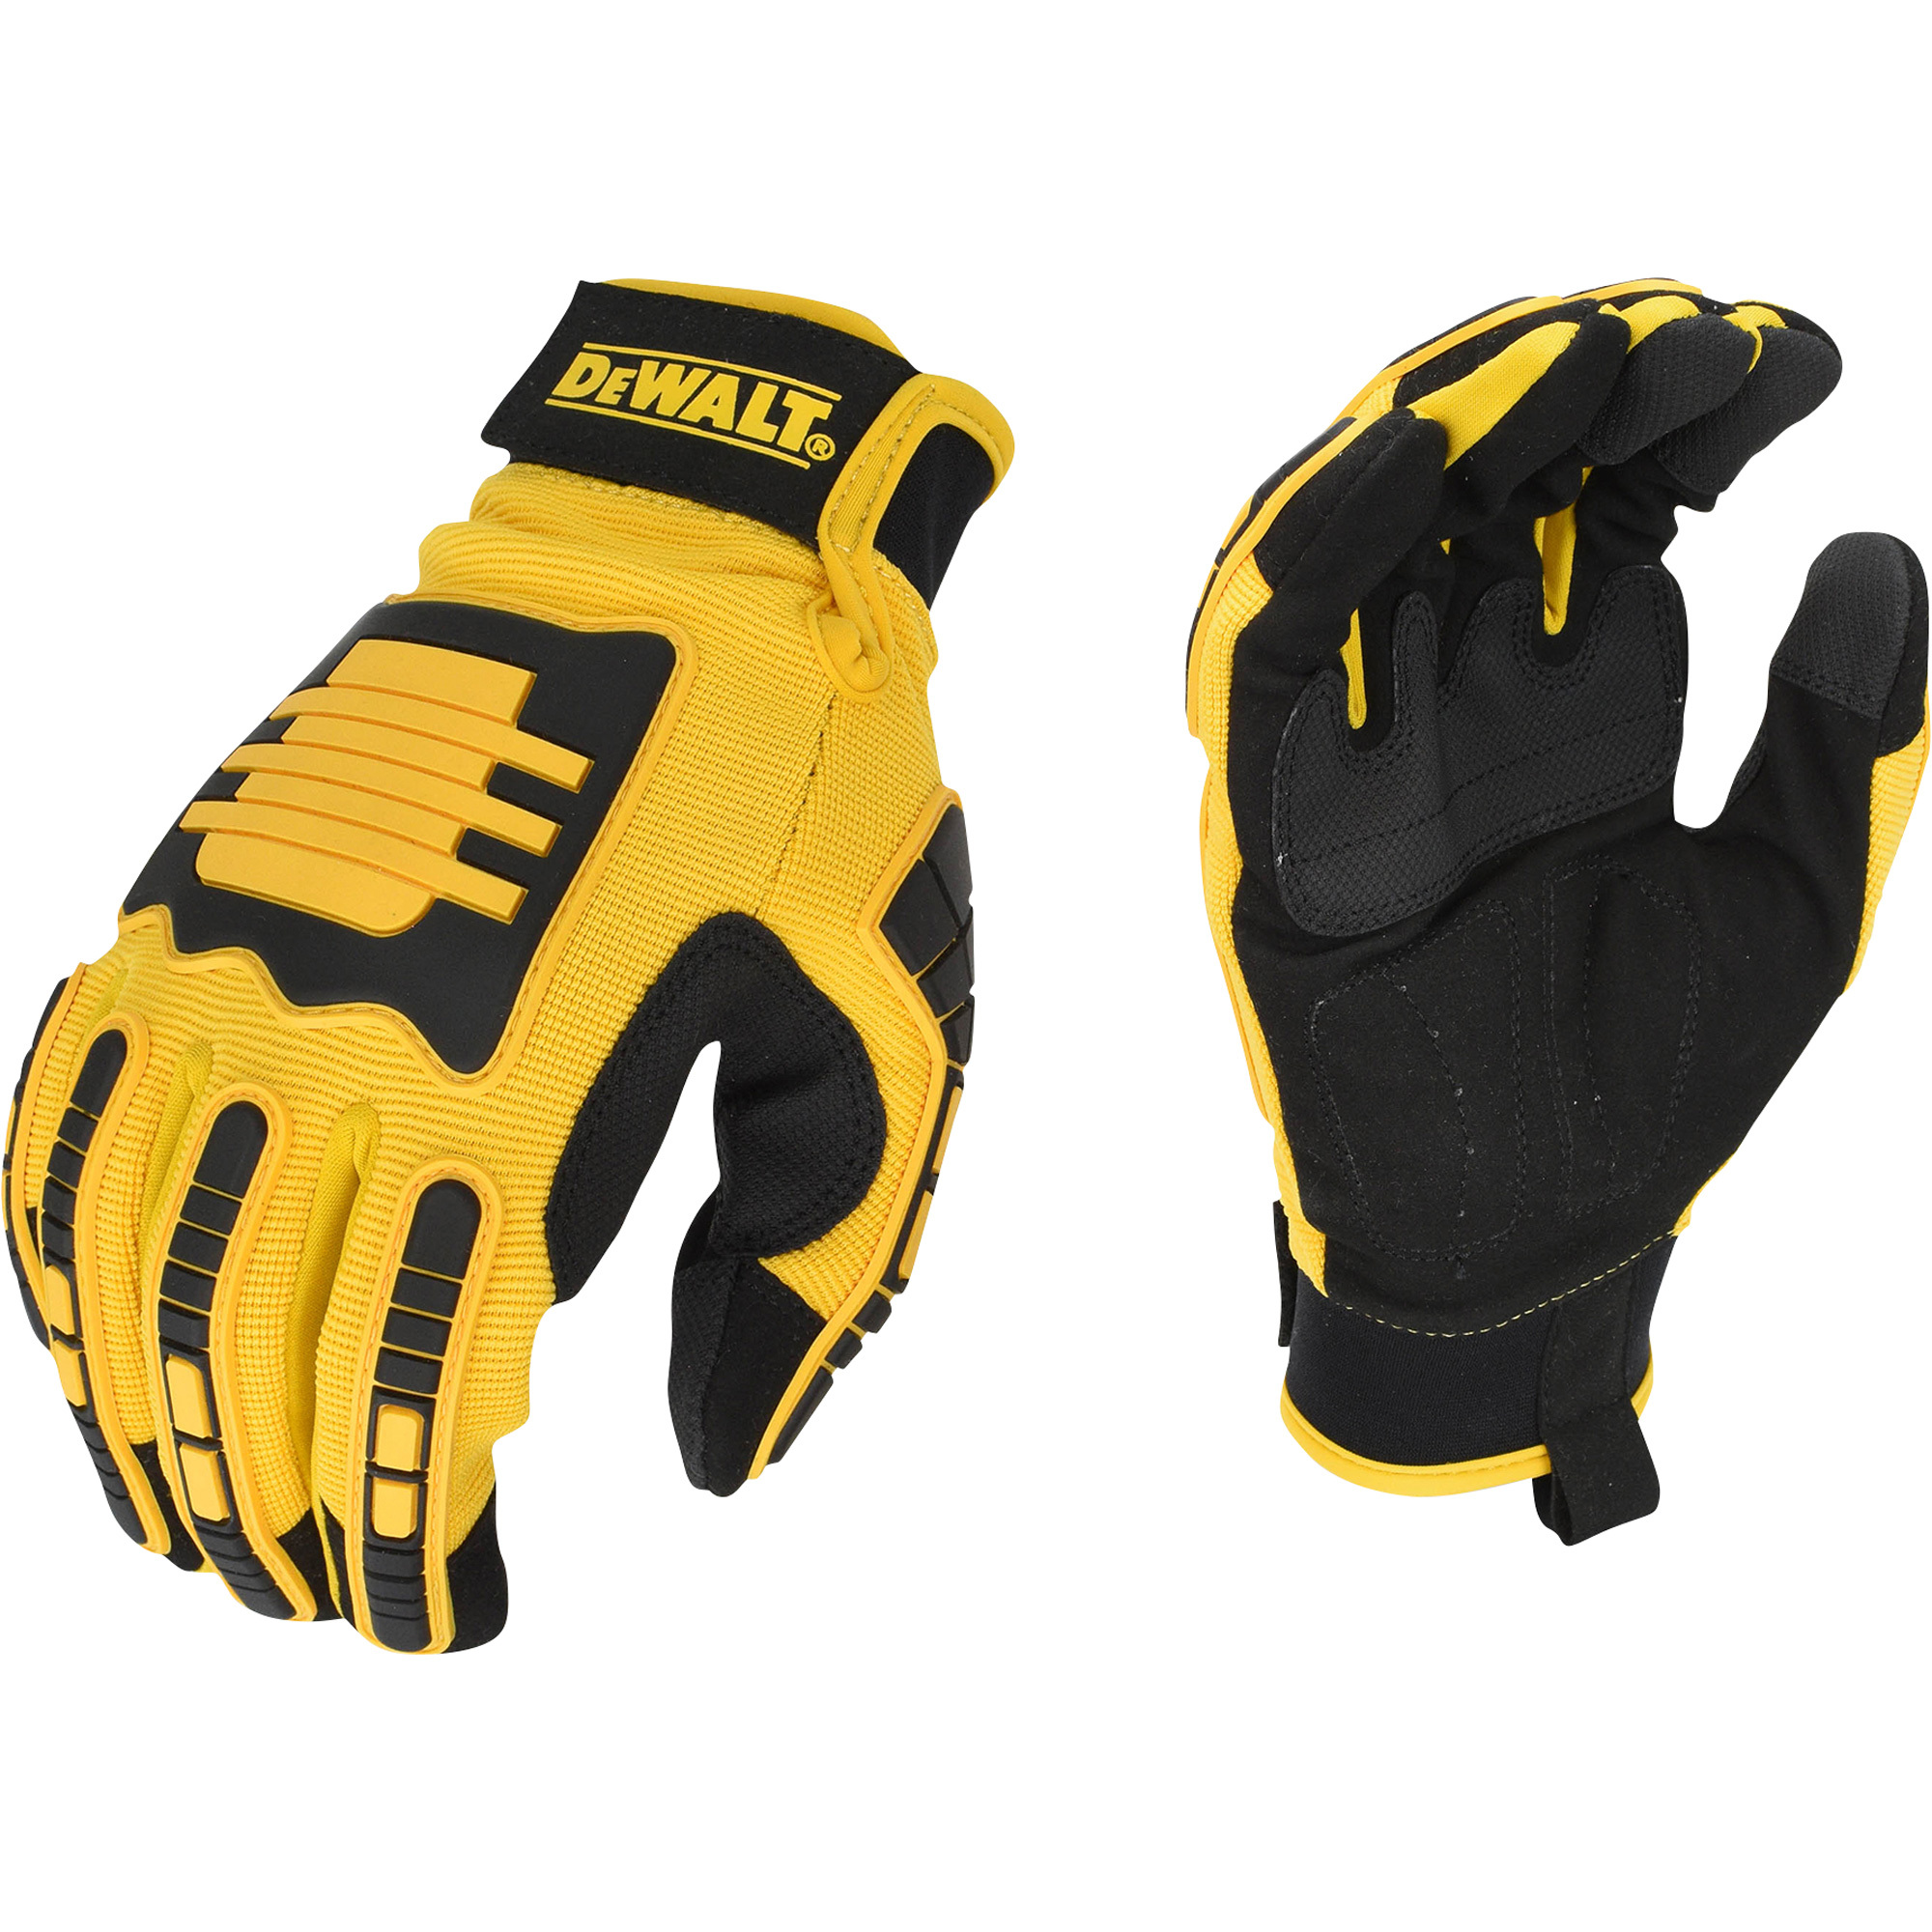 DEWALT Men's Impact Mechanic's Gloves â 1 Pair, Yellow/Black, XL, Model DPG781XL